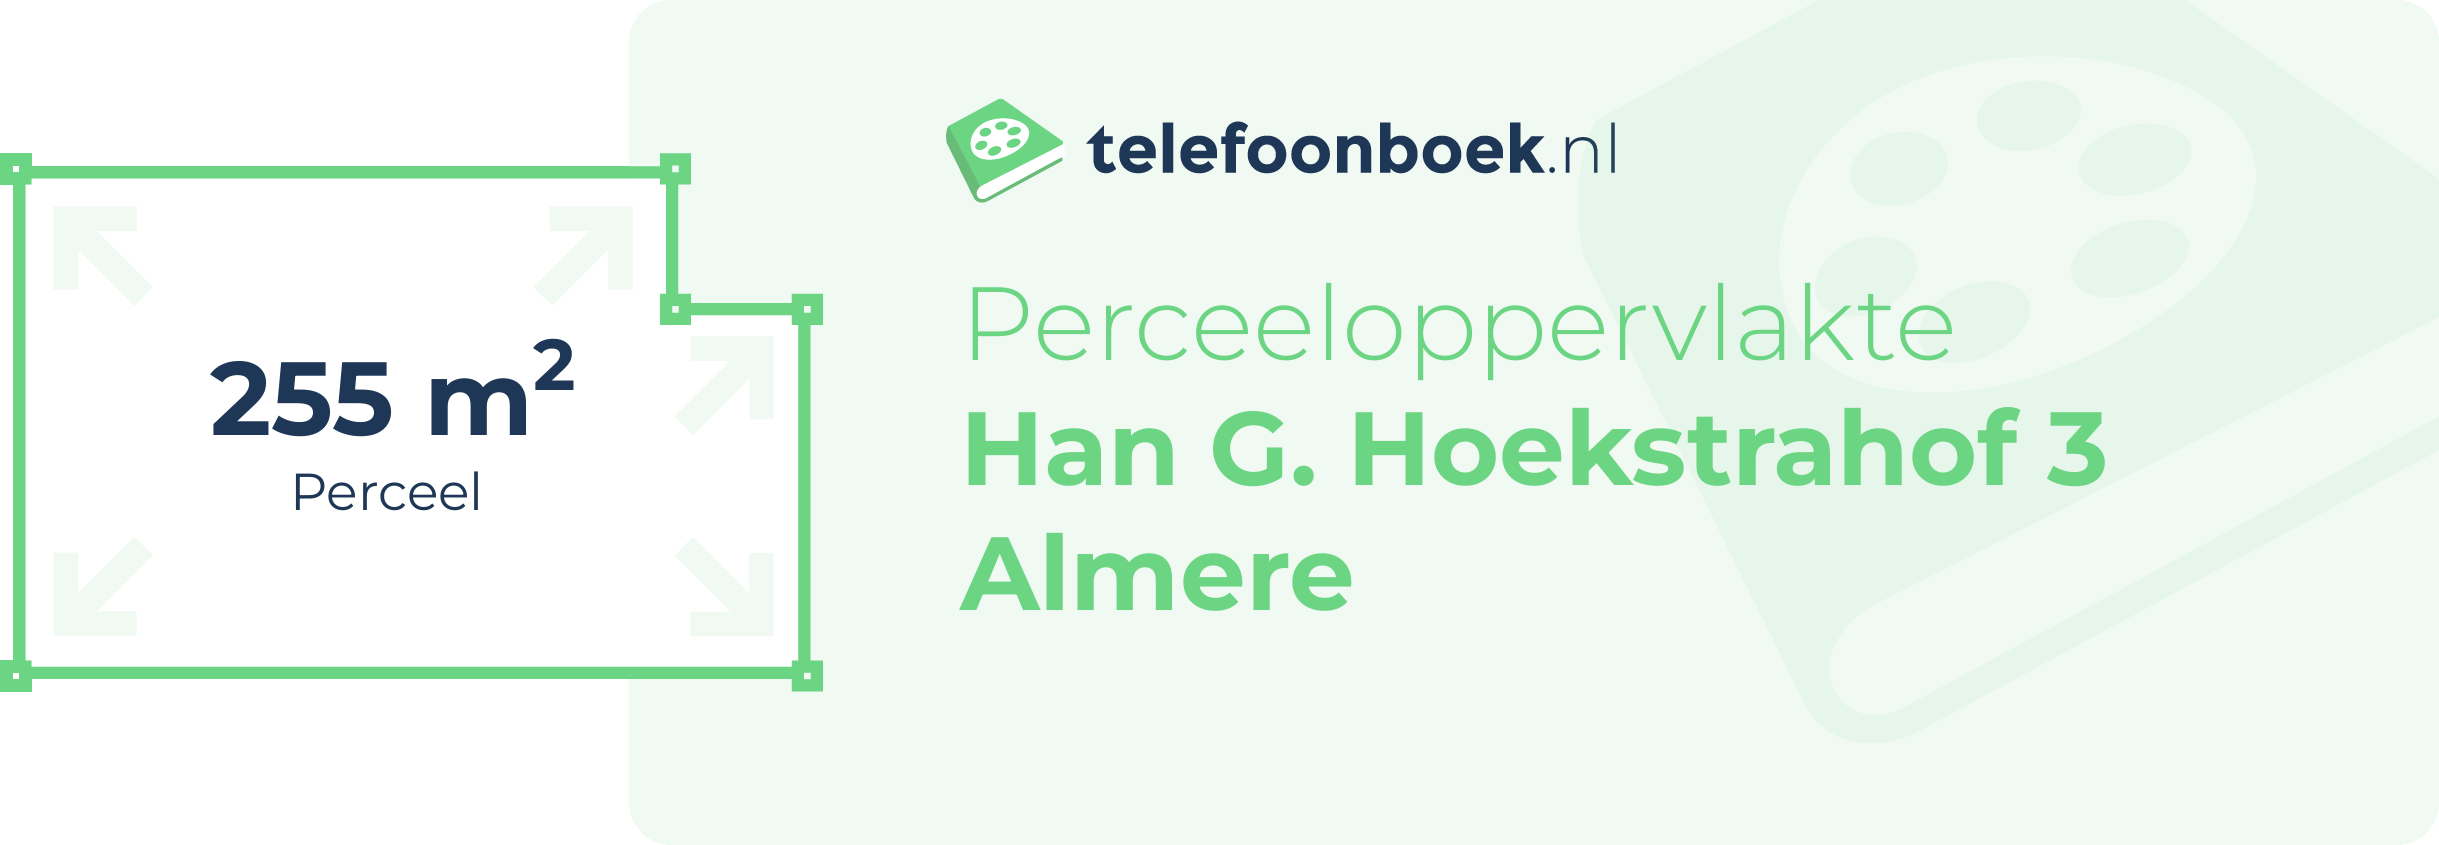 Perceeloppervlakte Han G. Hoekstrahof 3 Almere